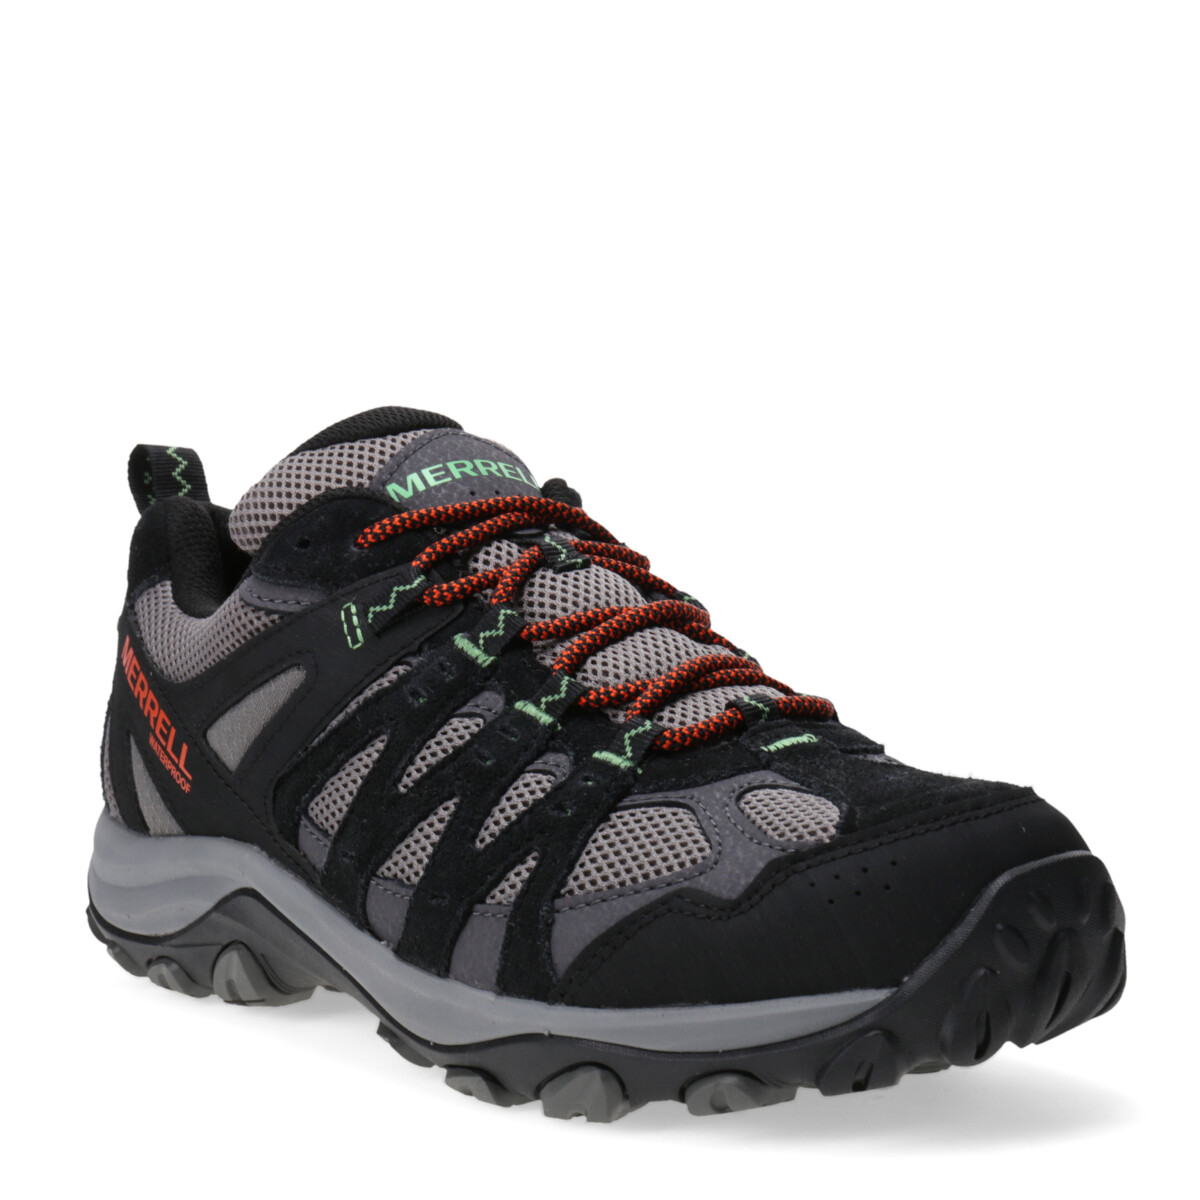 Zapato Accentor 3 Merrell - Black/Charcoal 